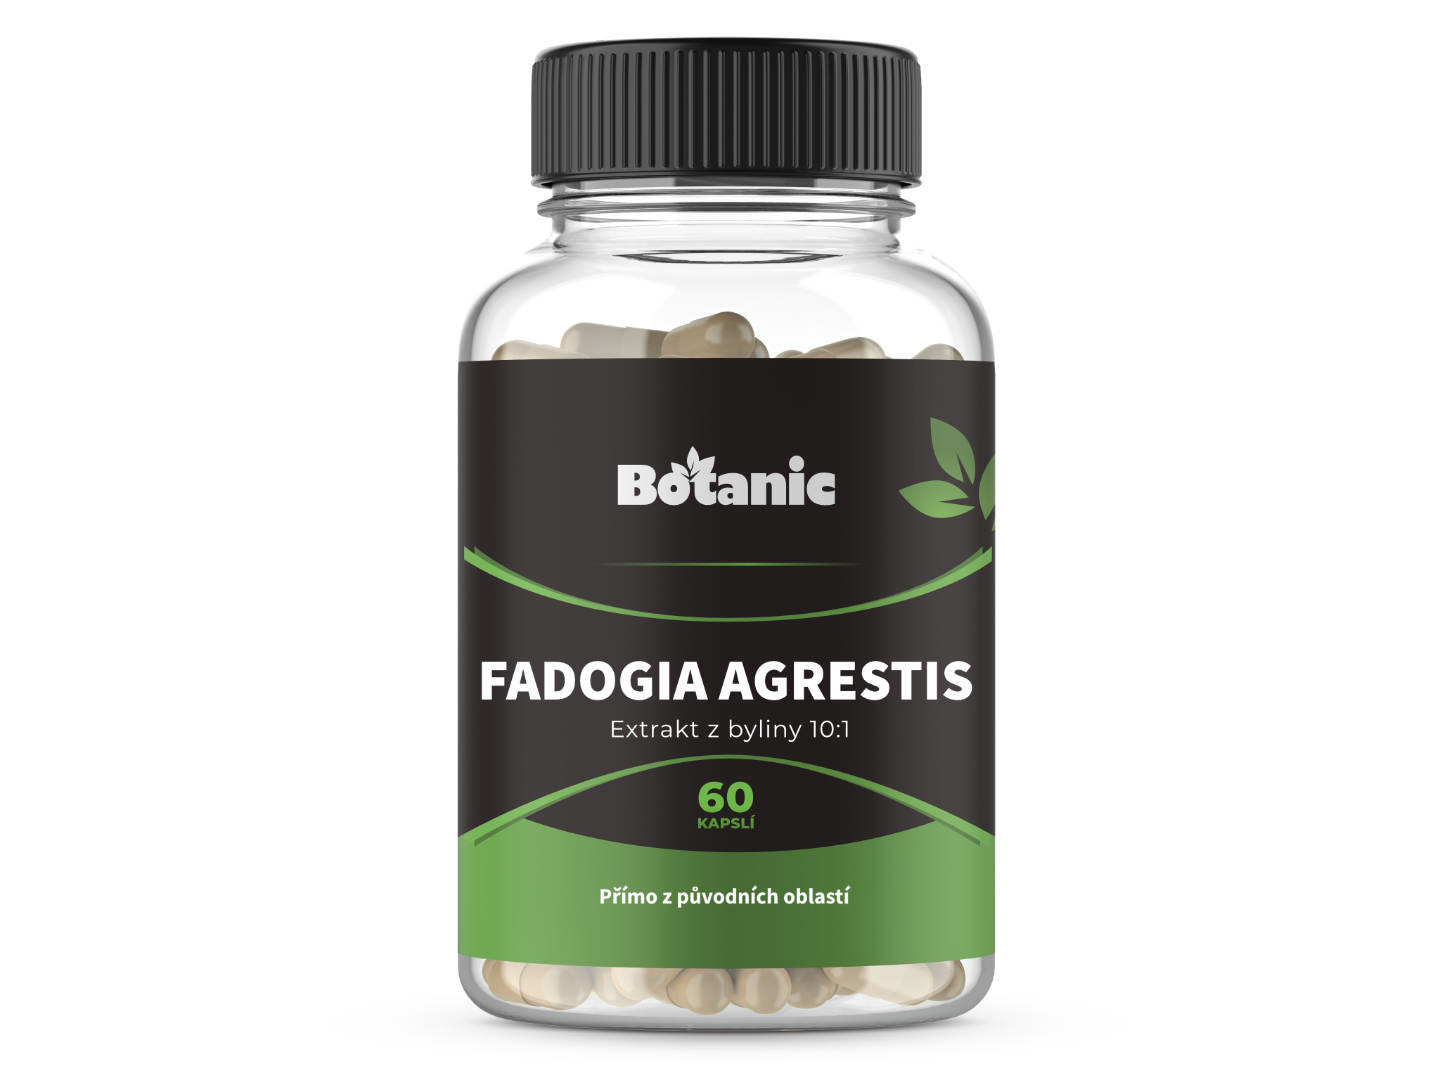 Botanic Fadogia agrestis - Extrakt z byliny 10:1 60kap.